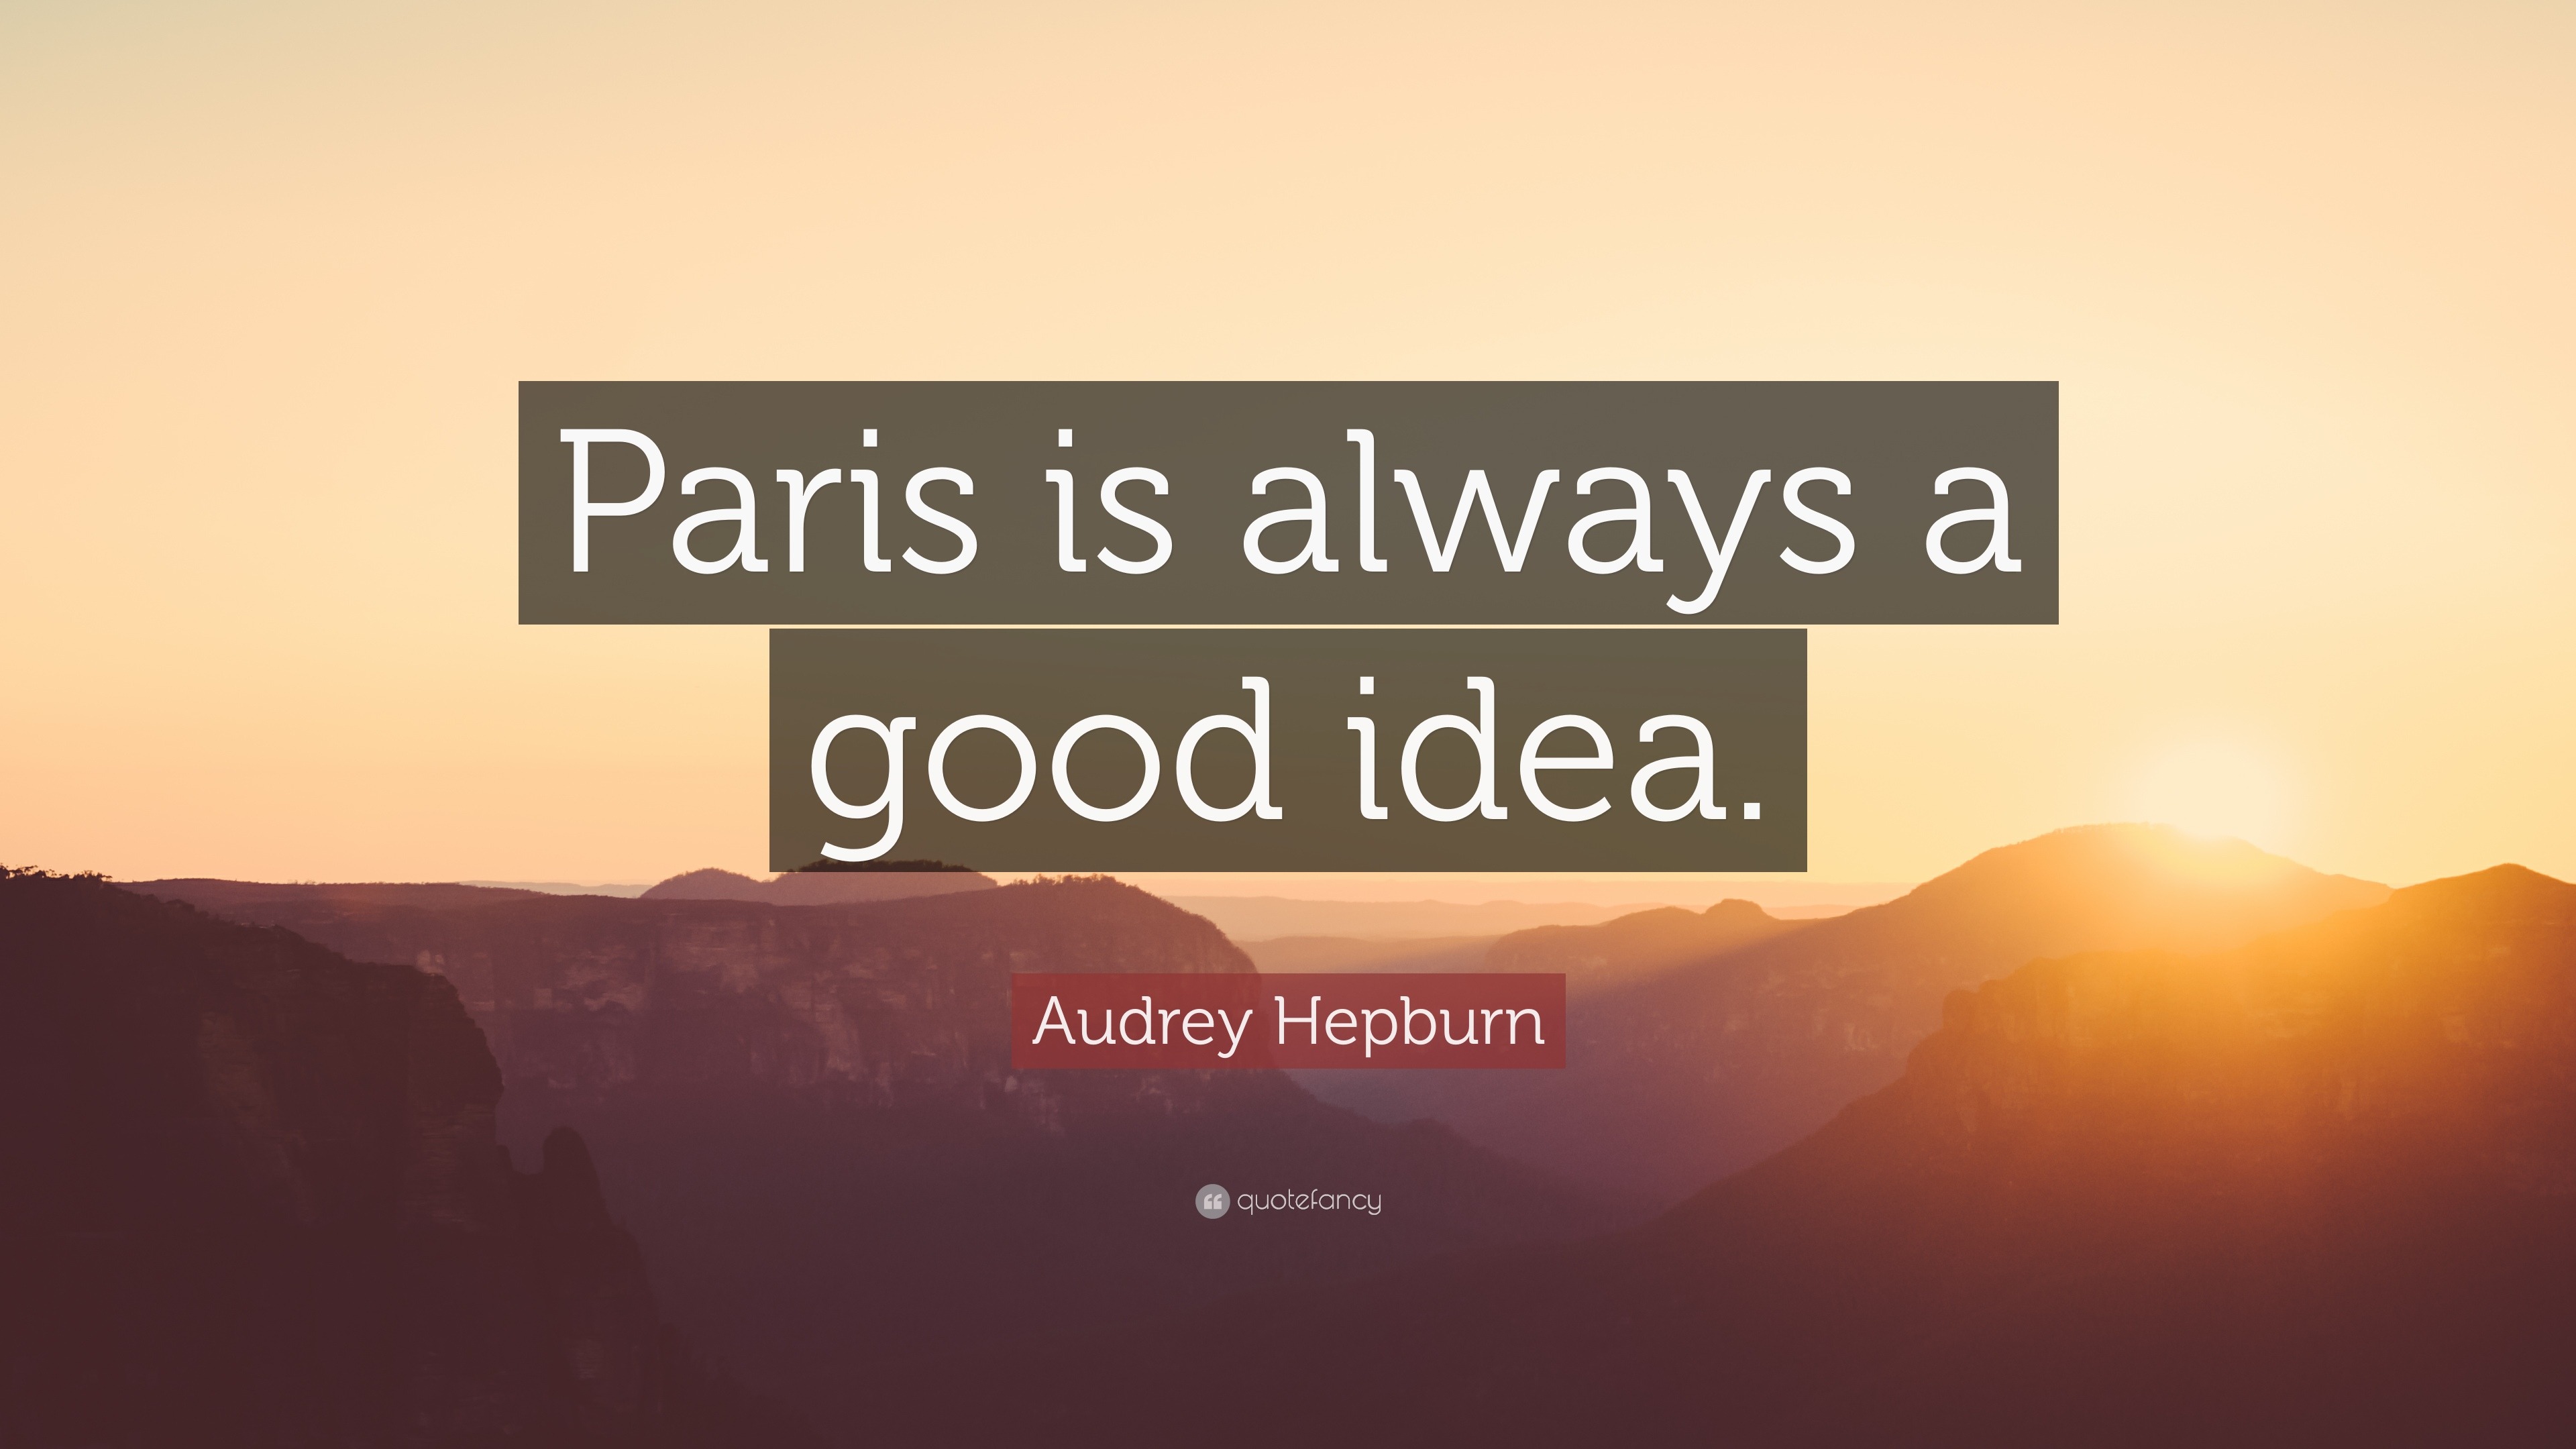 Audrey Hepburn Quote: “Paris is always a good idea.”